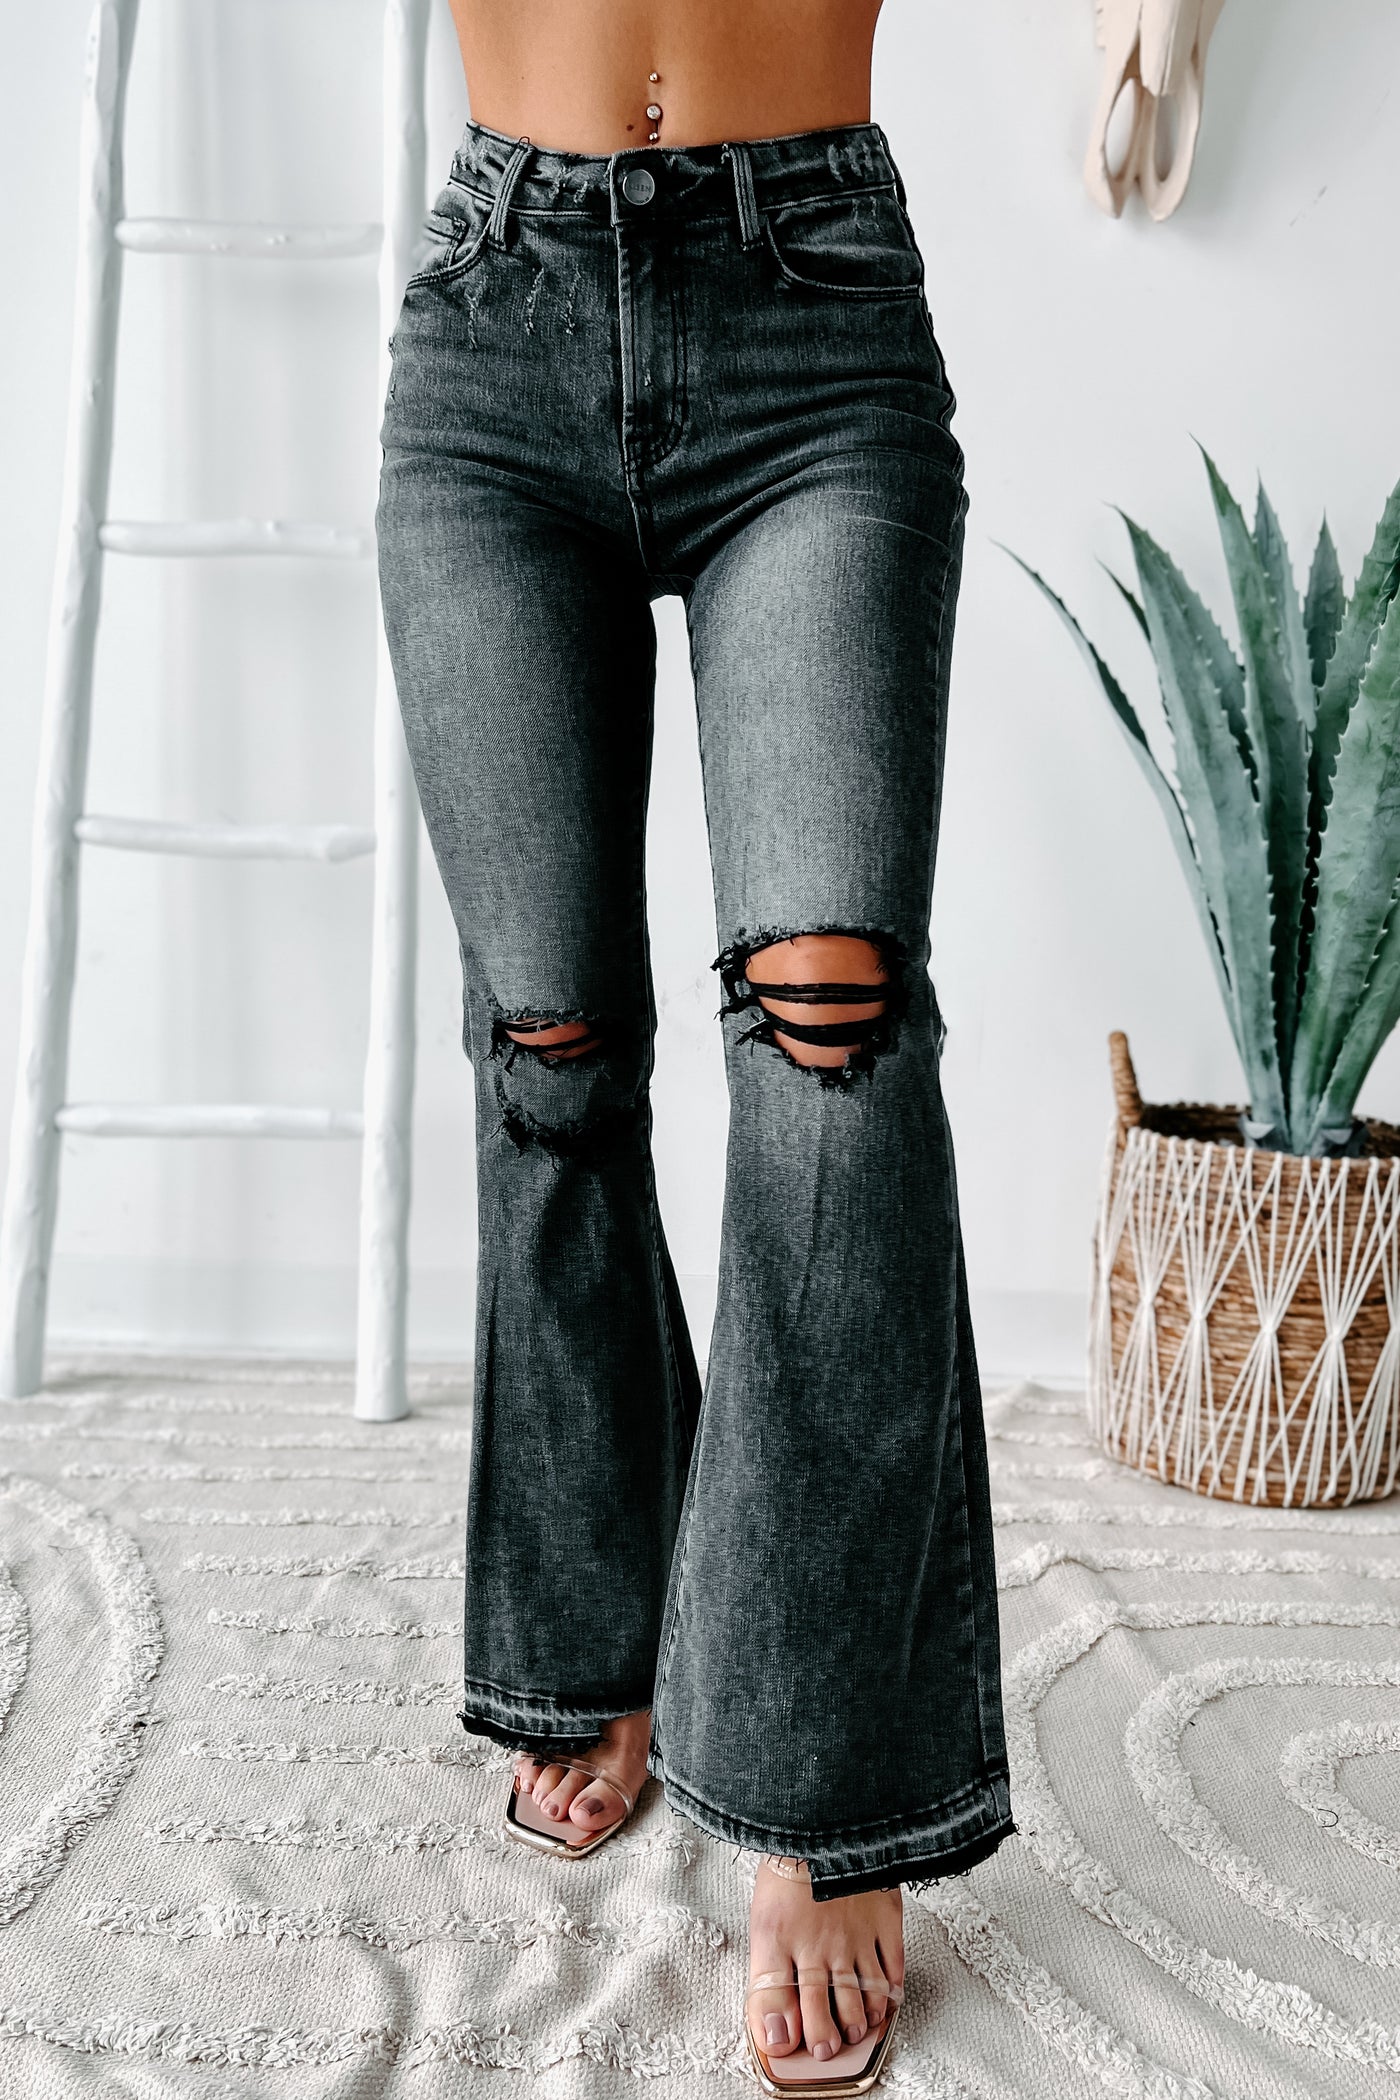 Black Label Women's Juniors High Rise Crop Flare Jeans (Black, 5